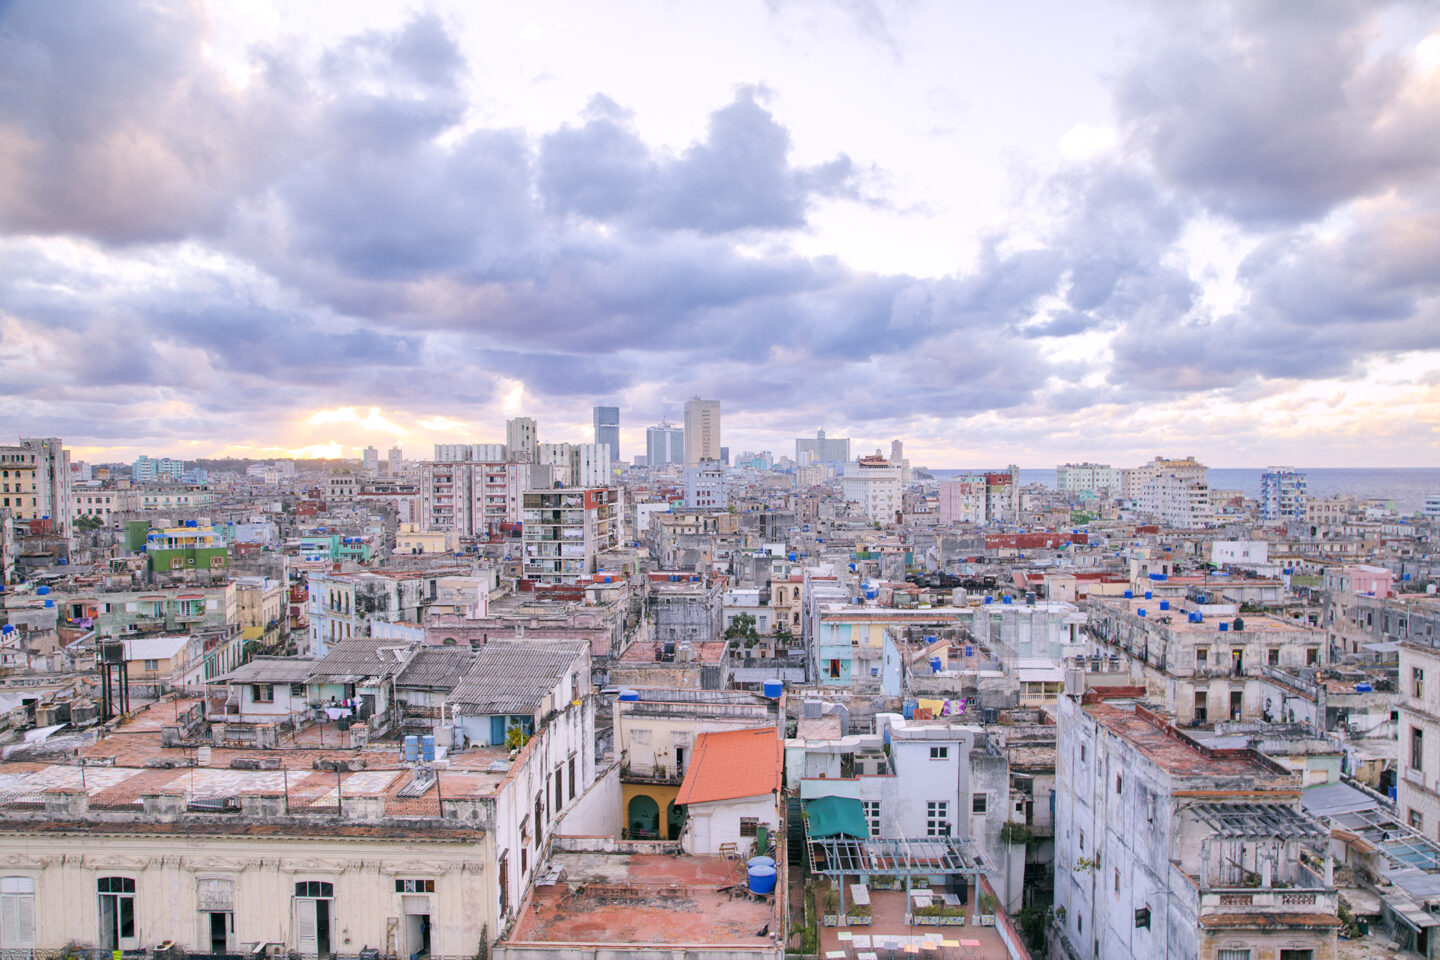 Skyline from above, the city skyline of Havana, Cuba as seen from above by Carol Schiraldi of Carol's Little World. 